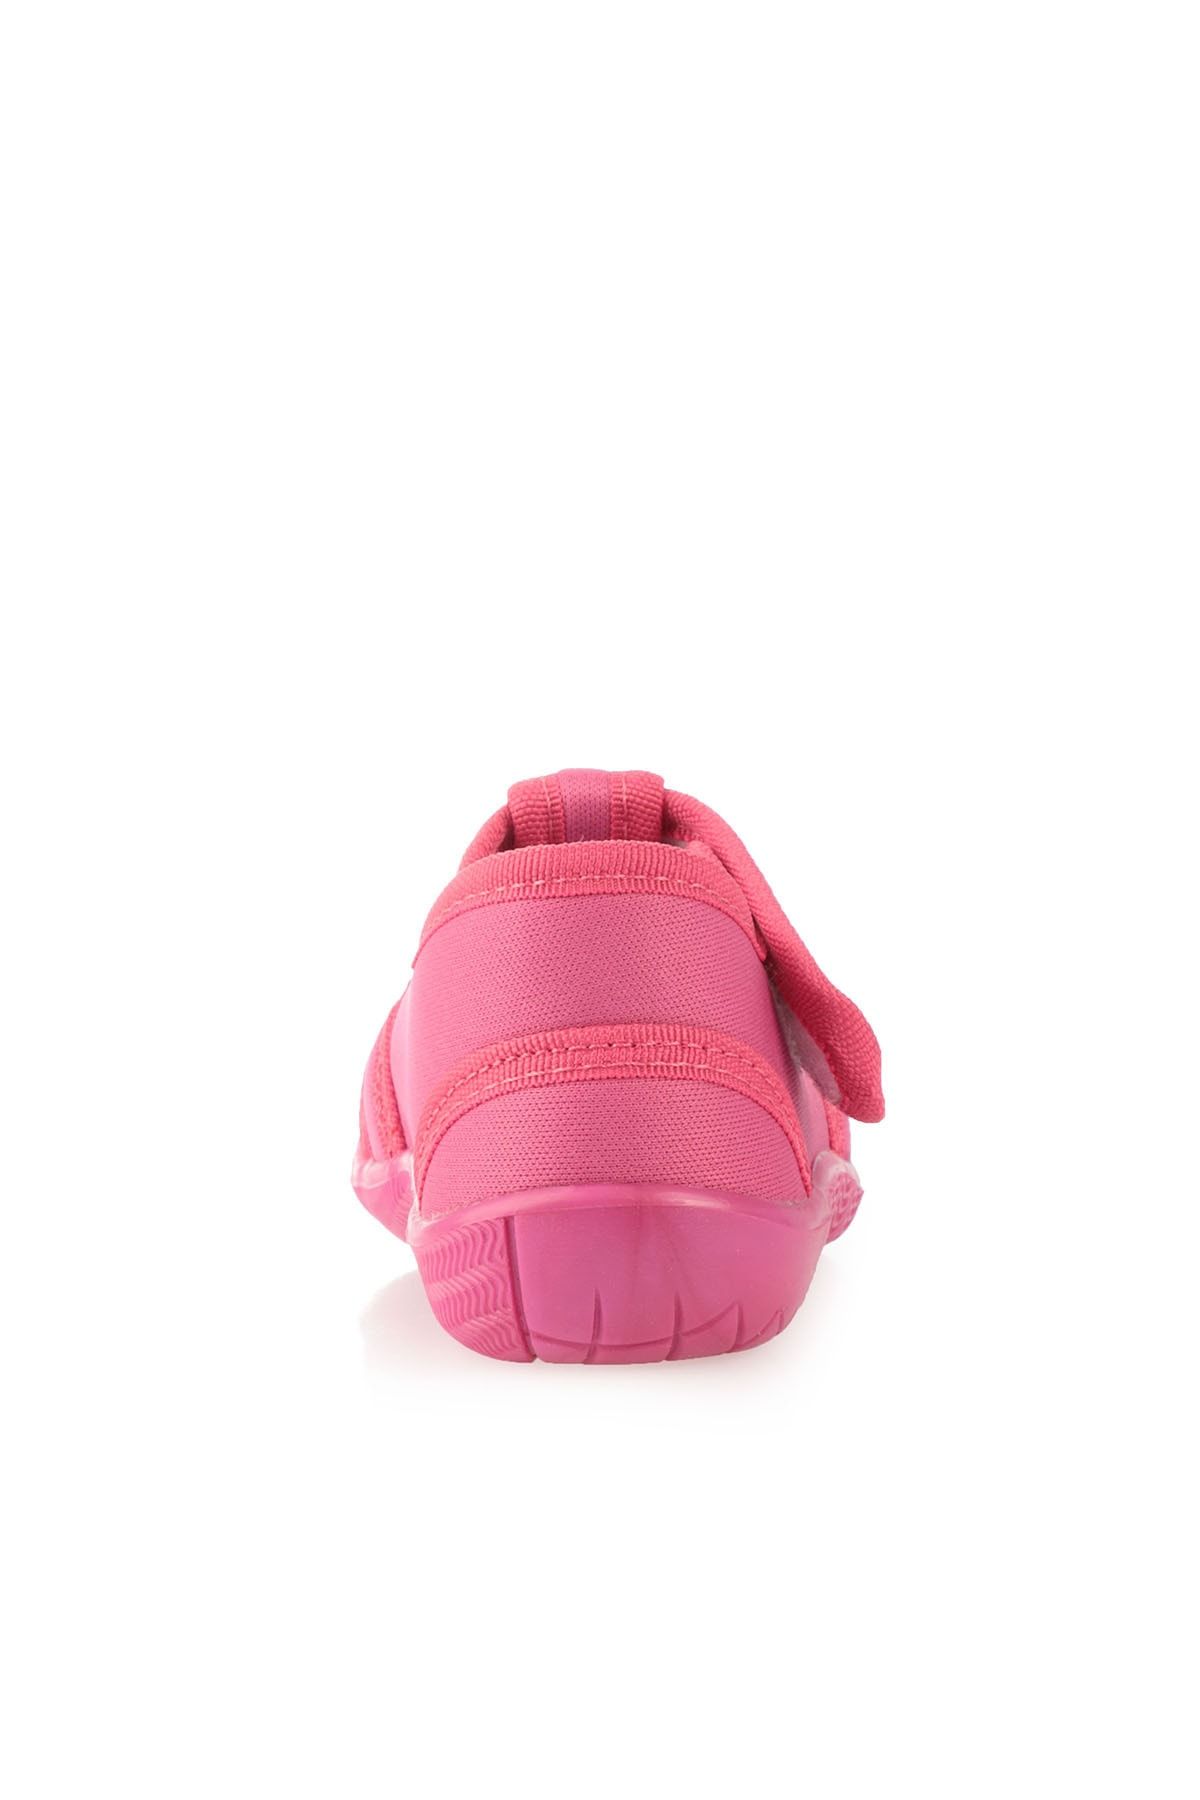 Slazenger کفش دختران ورزشی اوزی Fuchsia